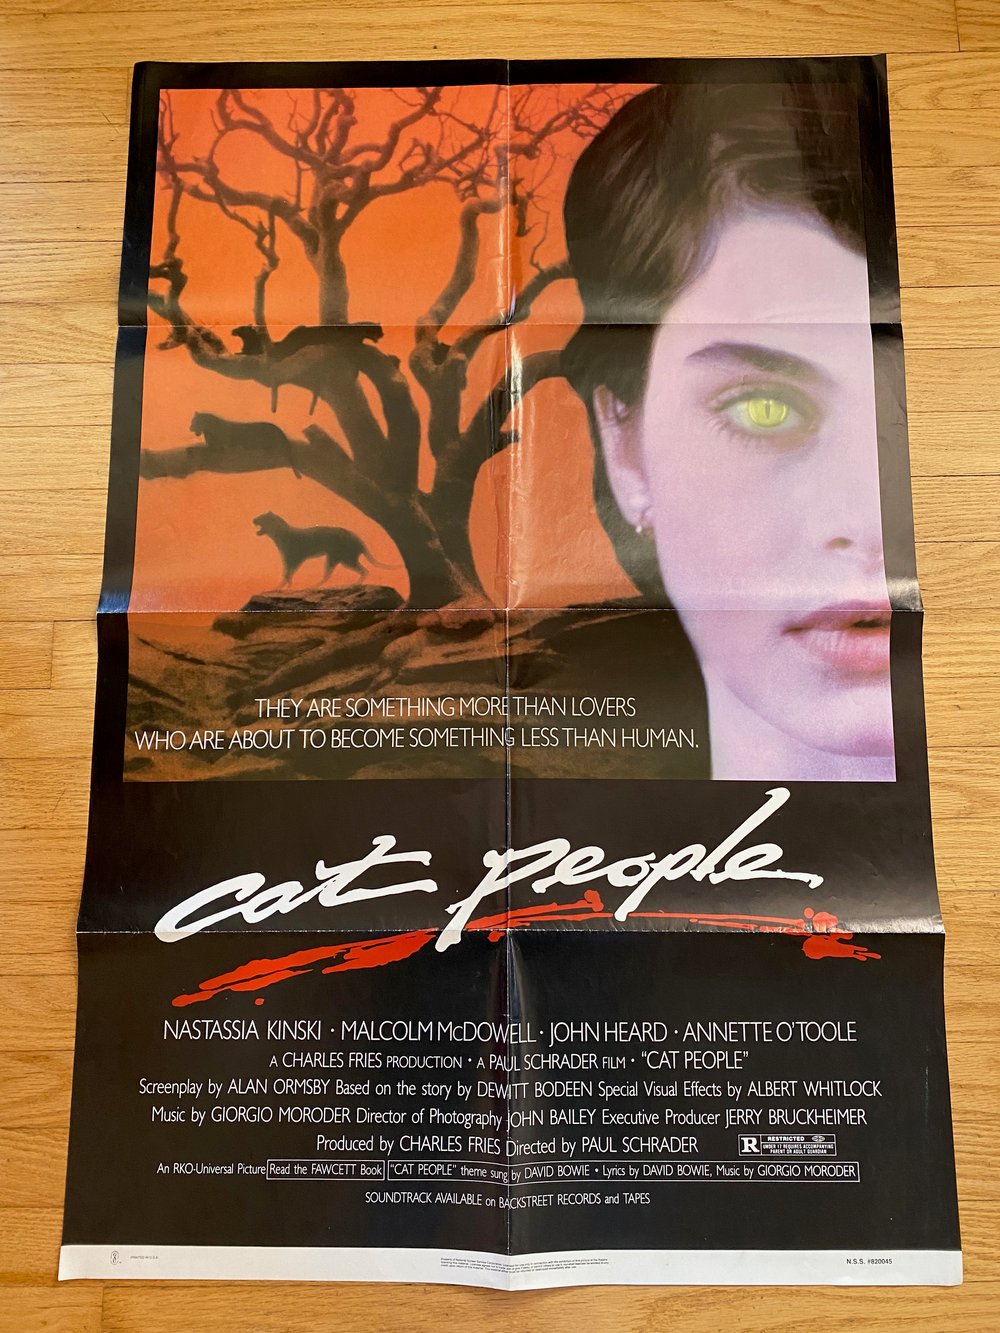 1982 CAT PEOPLE Original U.S. One Sheet Movie Poster